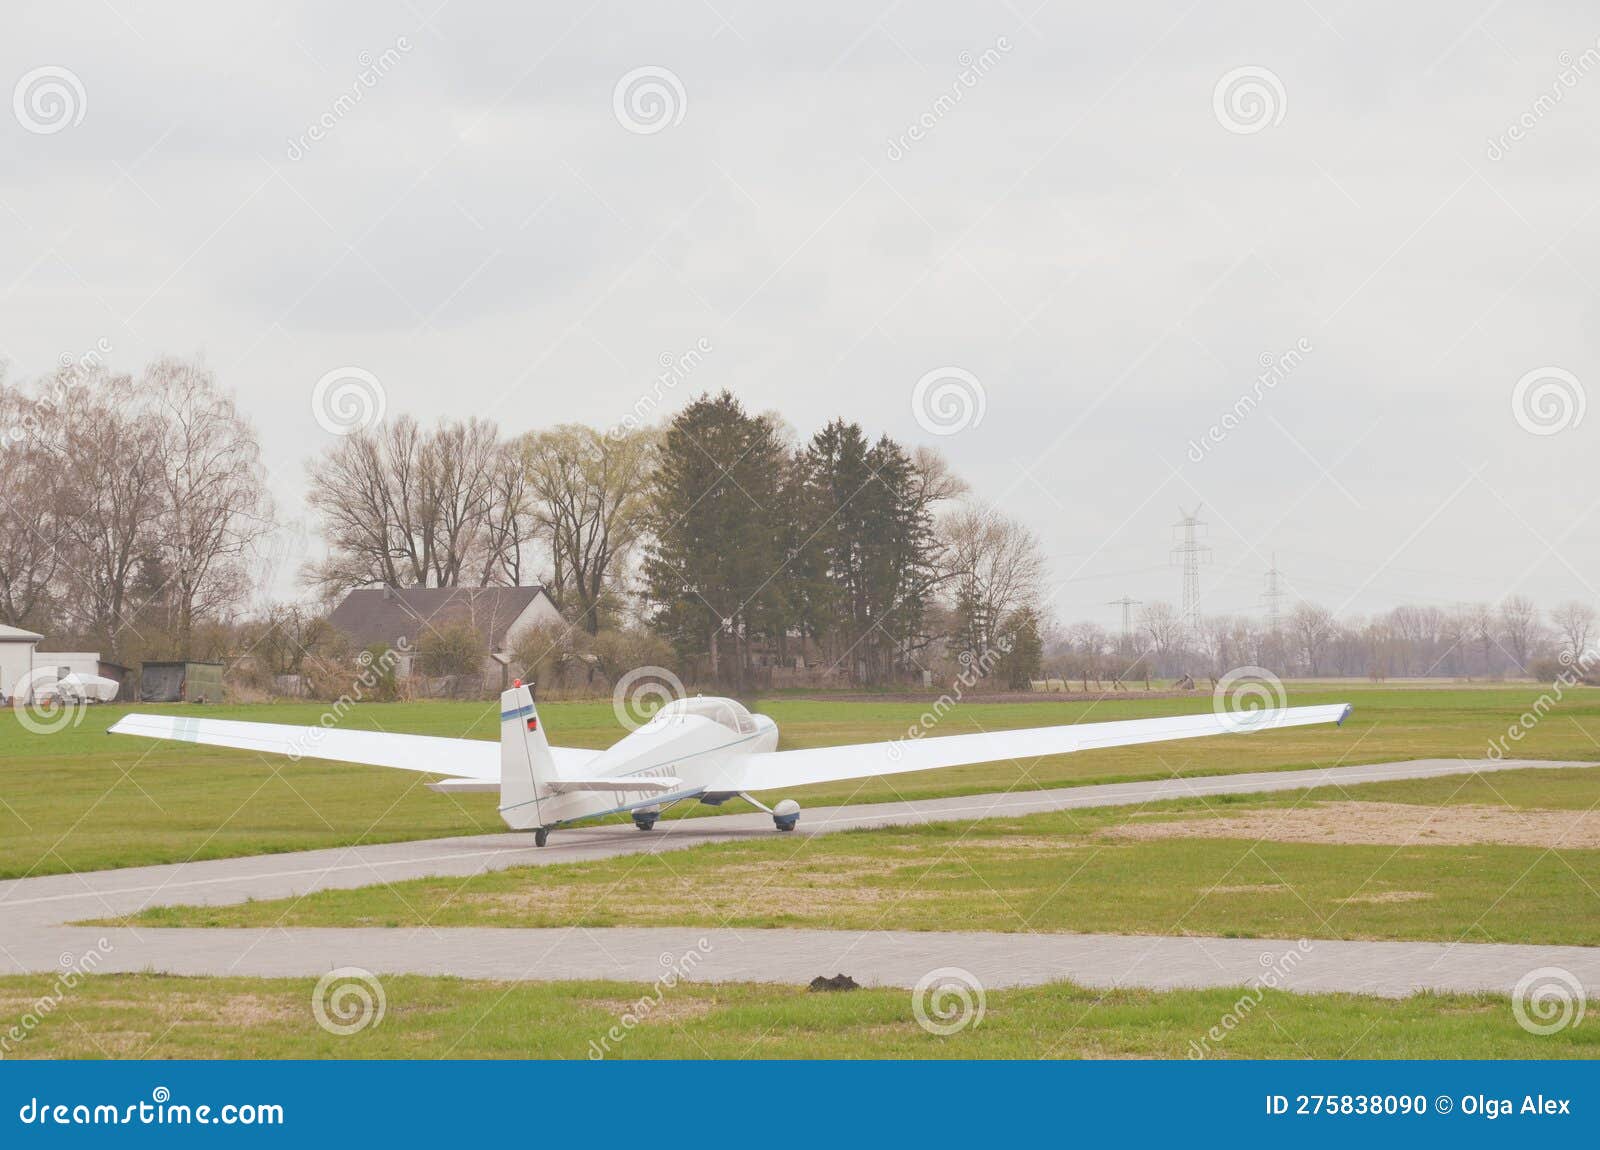 glider plane bergkirchen oberbayern, glider flying